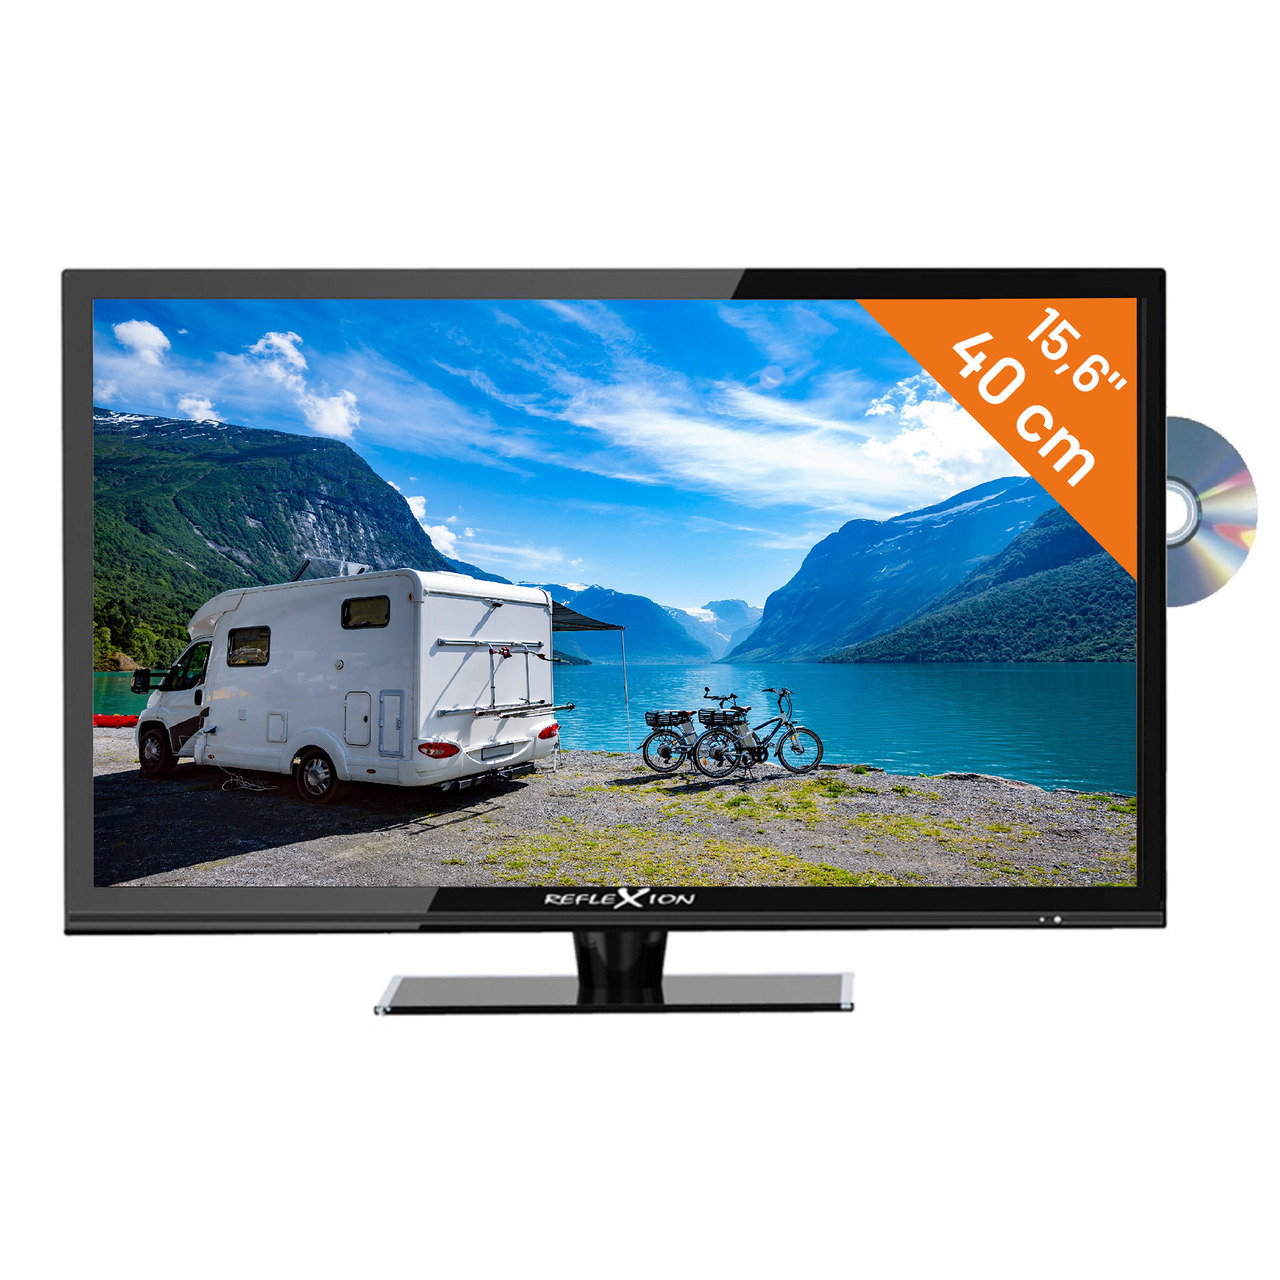 Reflexion 5-in-1-LED-TV LDDW160- 40 cm (15-6)- DVD-Player- DVB-S-S2-C-T-T2- H-265-HEVC- Full HD